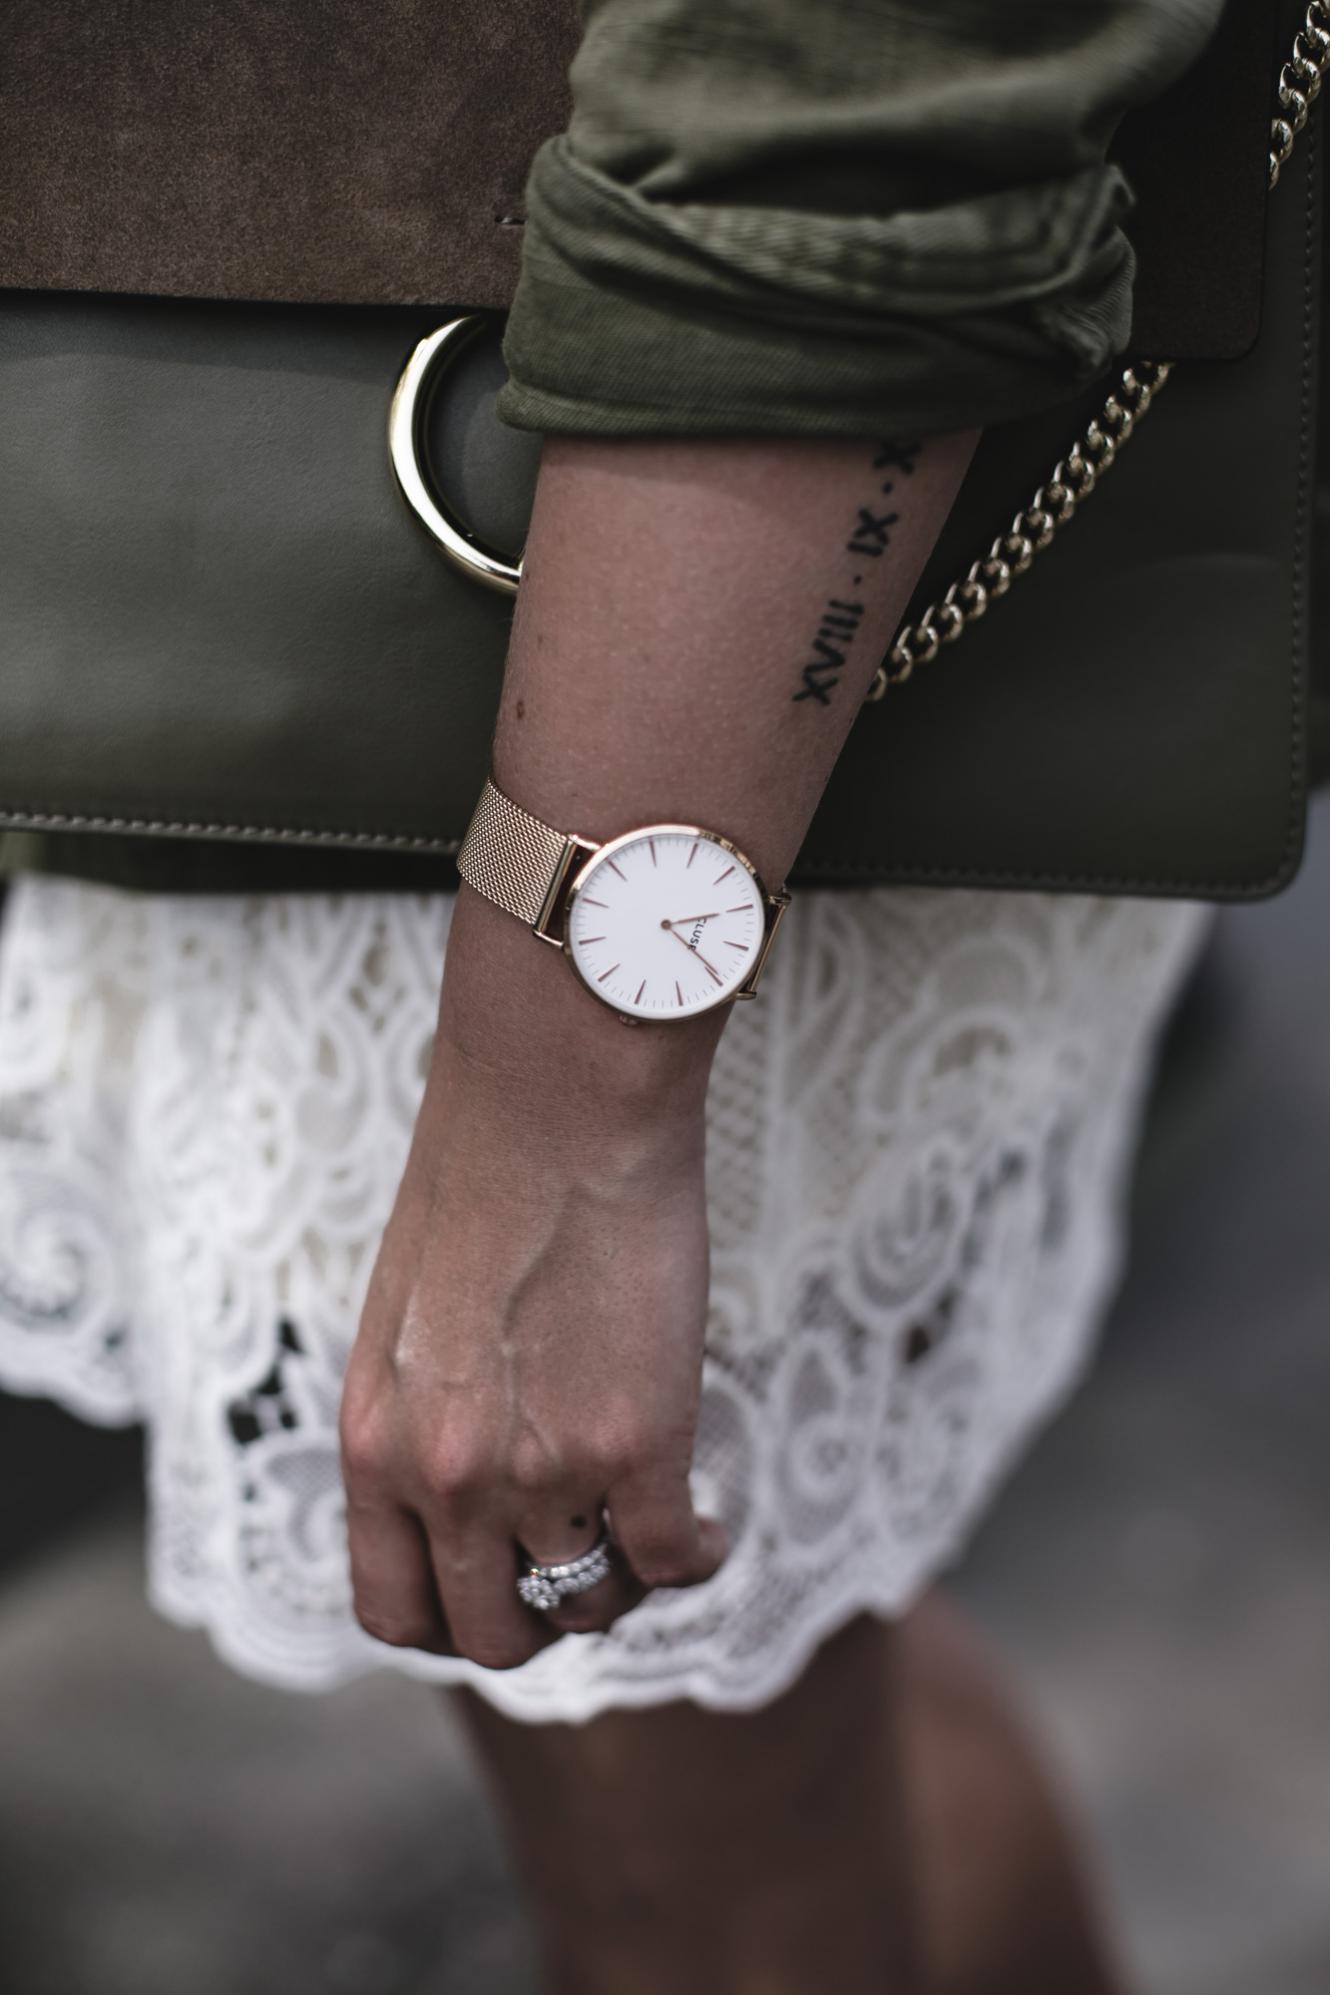 EJ Style | Gold Cluse watch, khaki jacket, Chloe Faye bag, cream lace dress